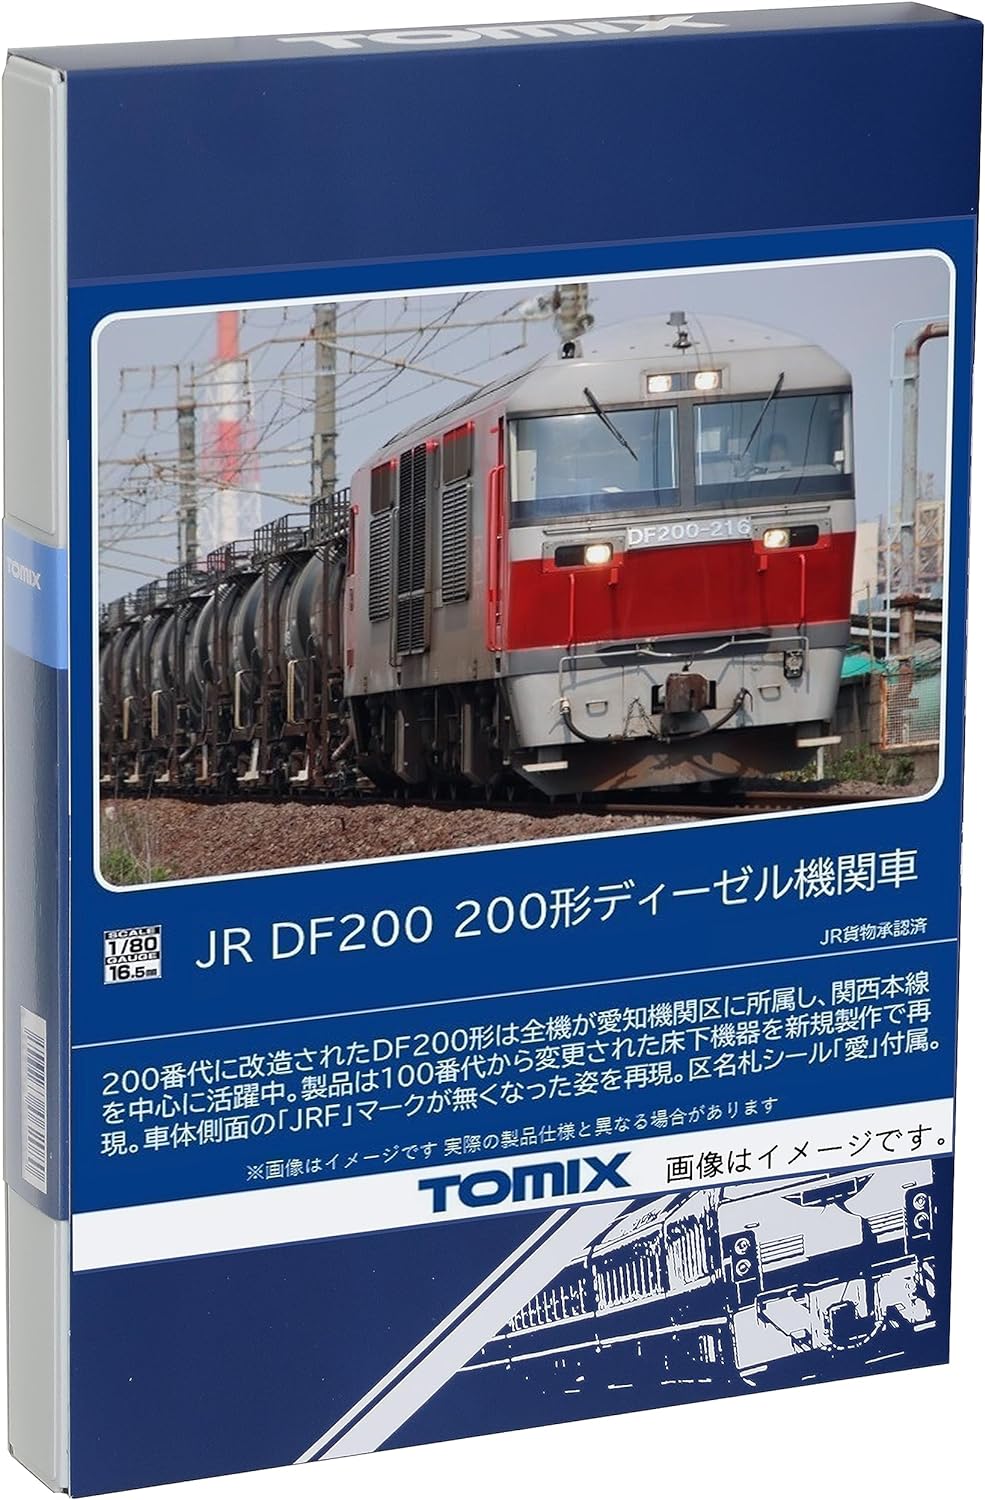 TOMIX HO-211 HO Gauge JR DF200 Type 200 Railway Model Diesel Locomotive - BanzaiHobby